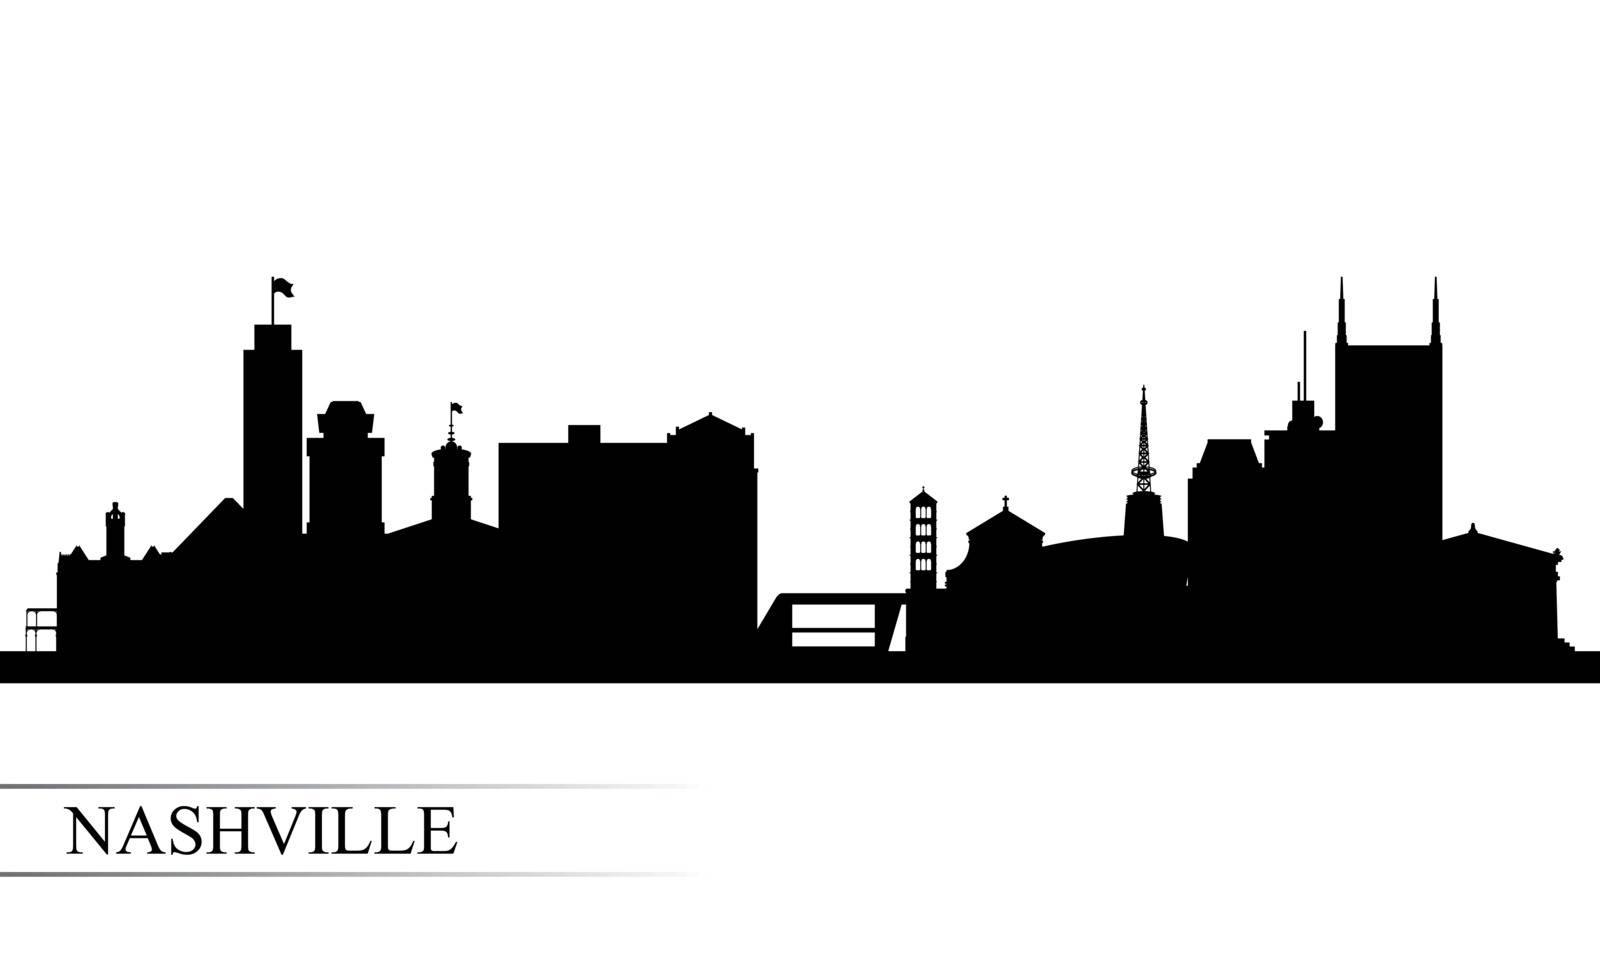 Nashville city skyline silhouette background by Ray_of_Light